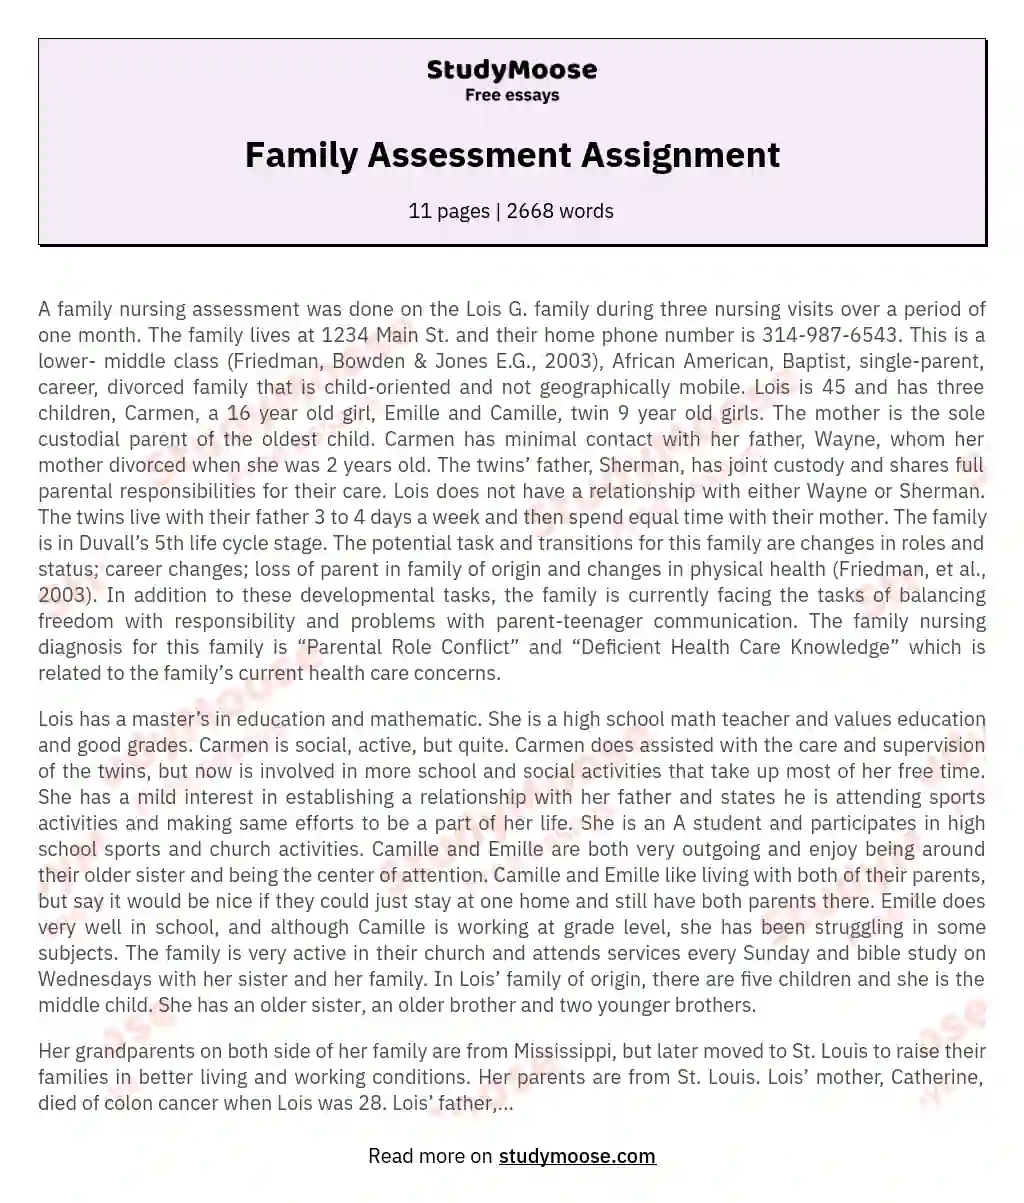 Family Assessment Assignment essay